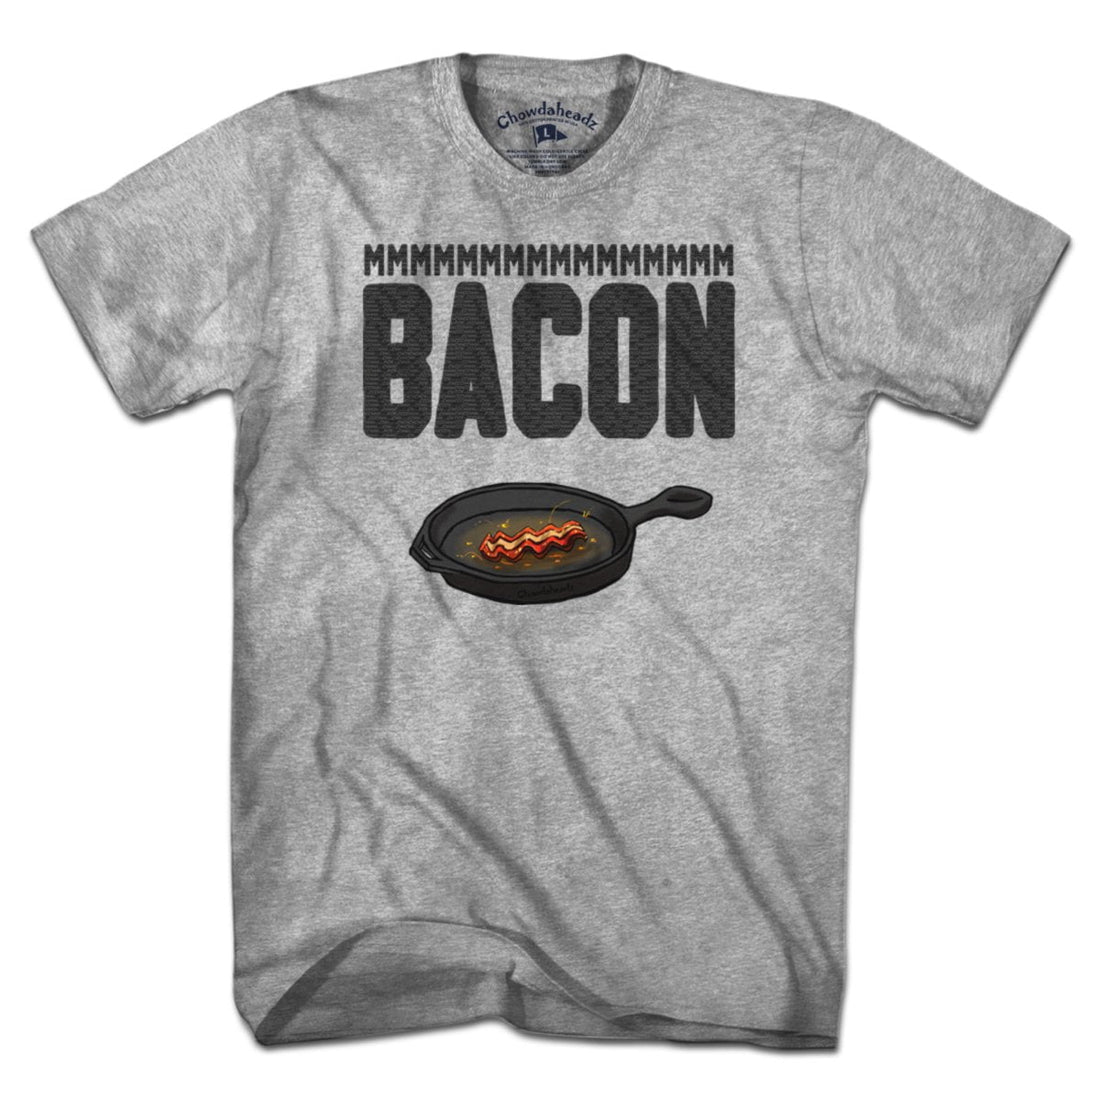 MMM Bacon T-Shirt - Chowdaheadz